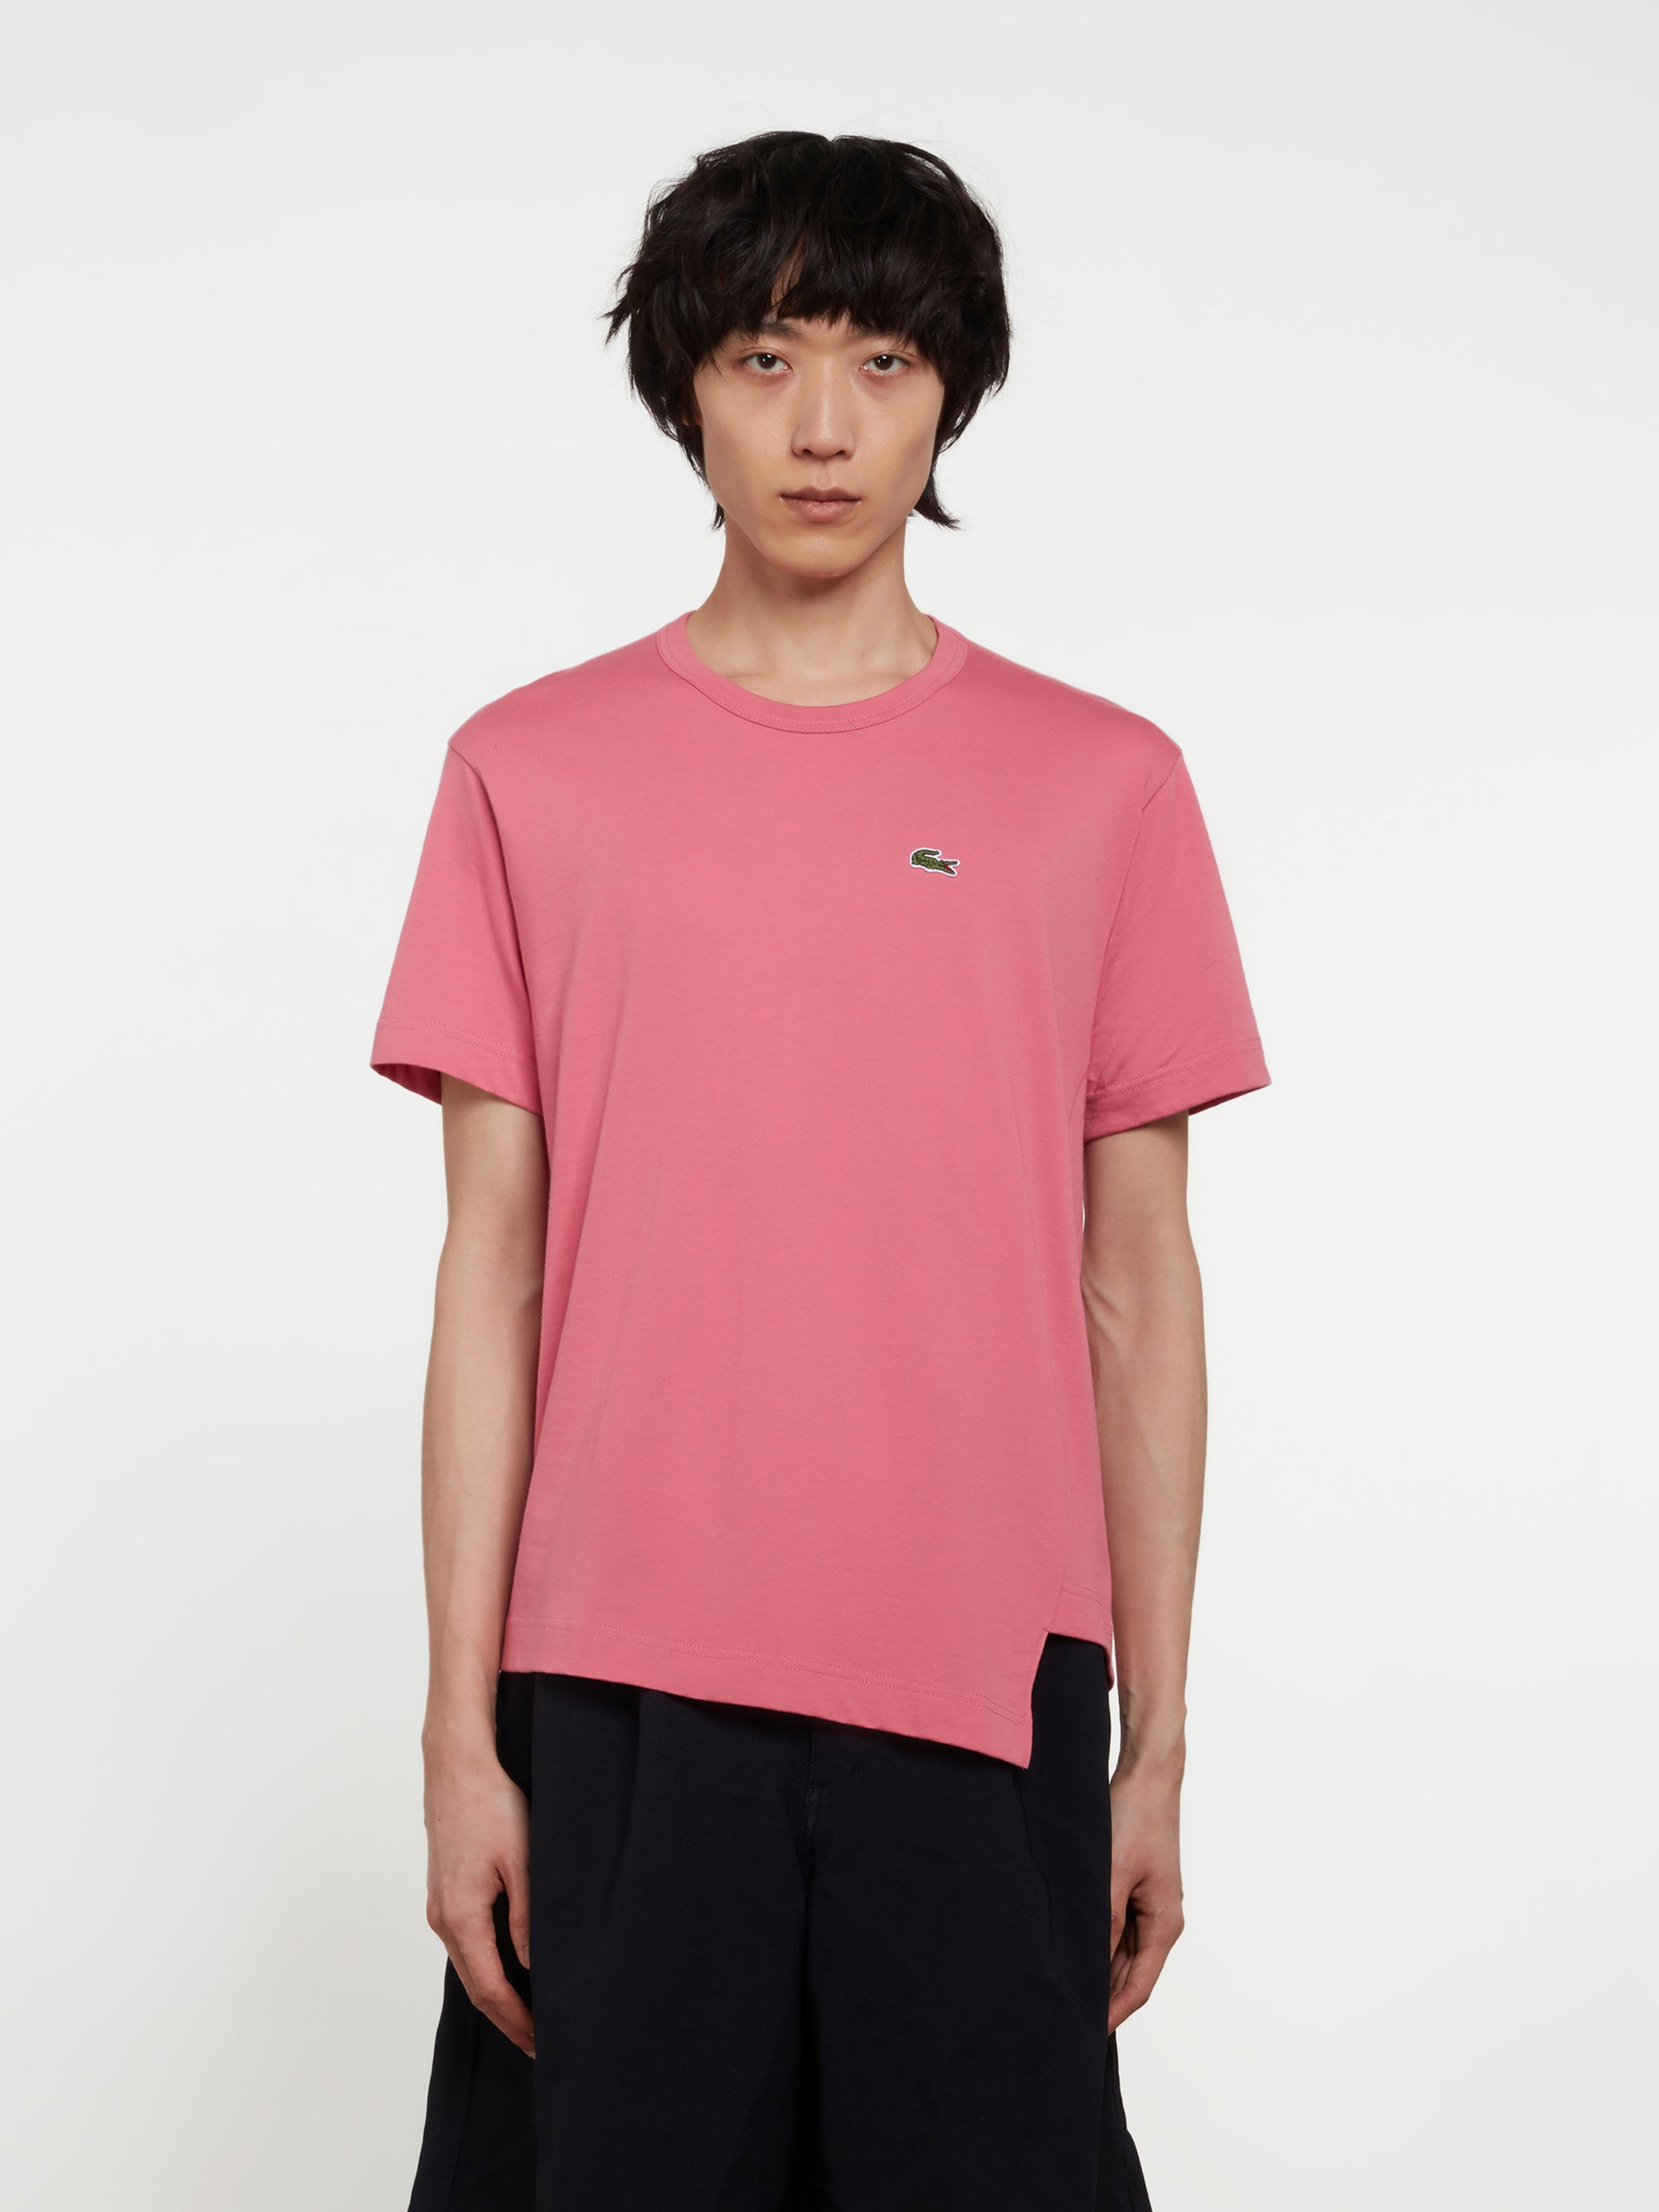 CDG Shirt - Lacoste Men’s T-Shirt - (Pink) view 1